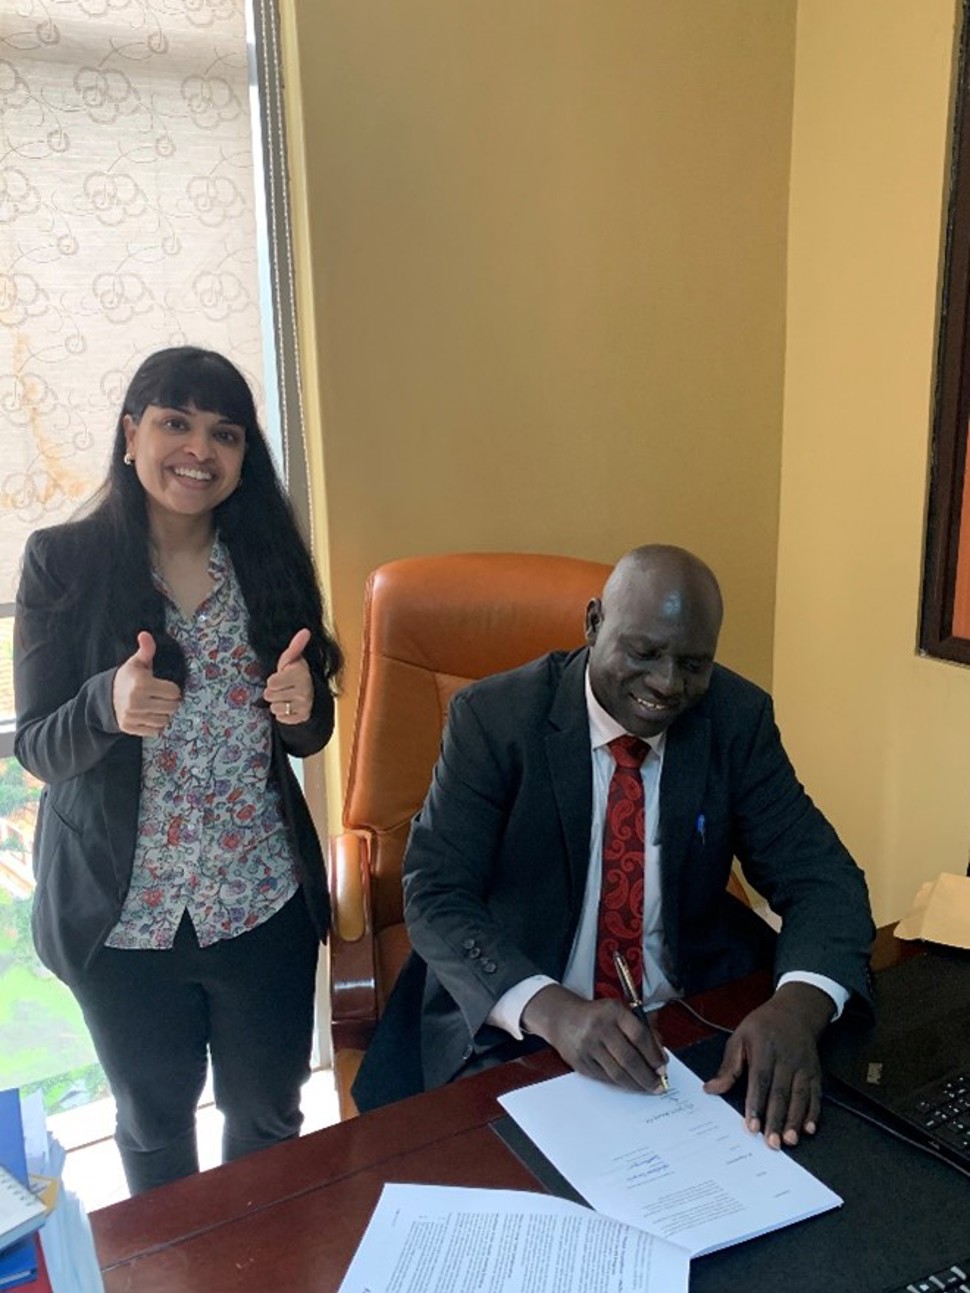 Photo 1: BIS Uganda Country Coordinator Mahima Venkateswaran looks on as Dr Alex Ario Riolexus, Director of UNIPH, signs the Collaboration Agreement